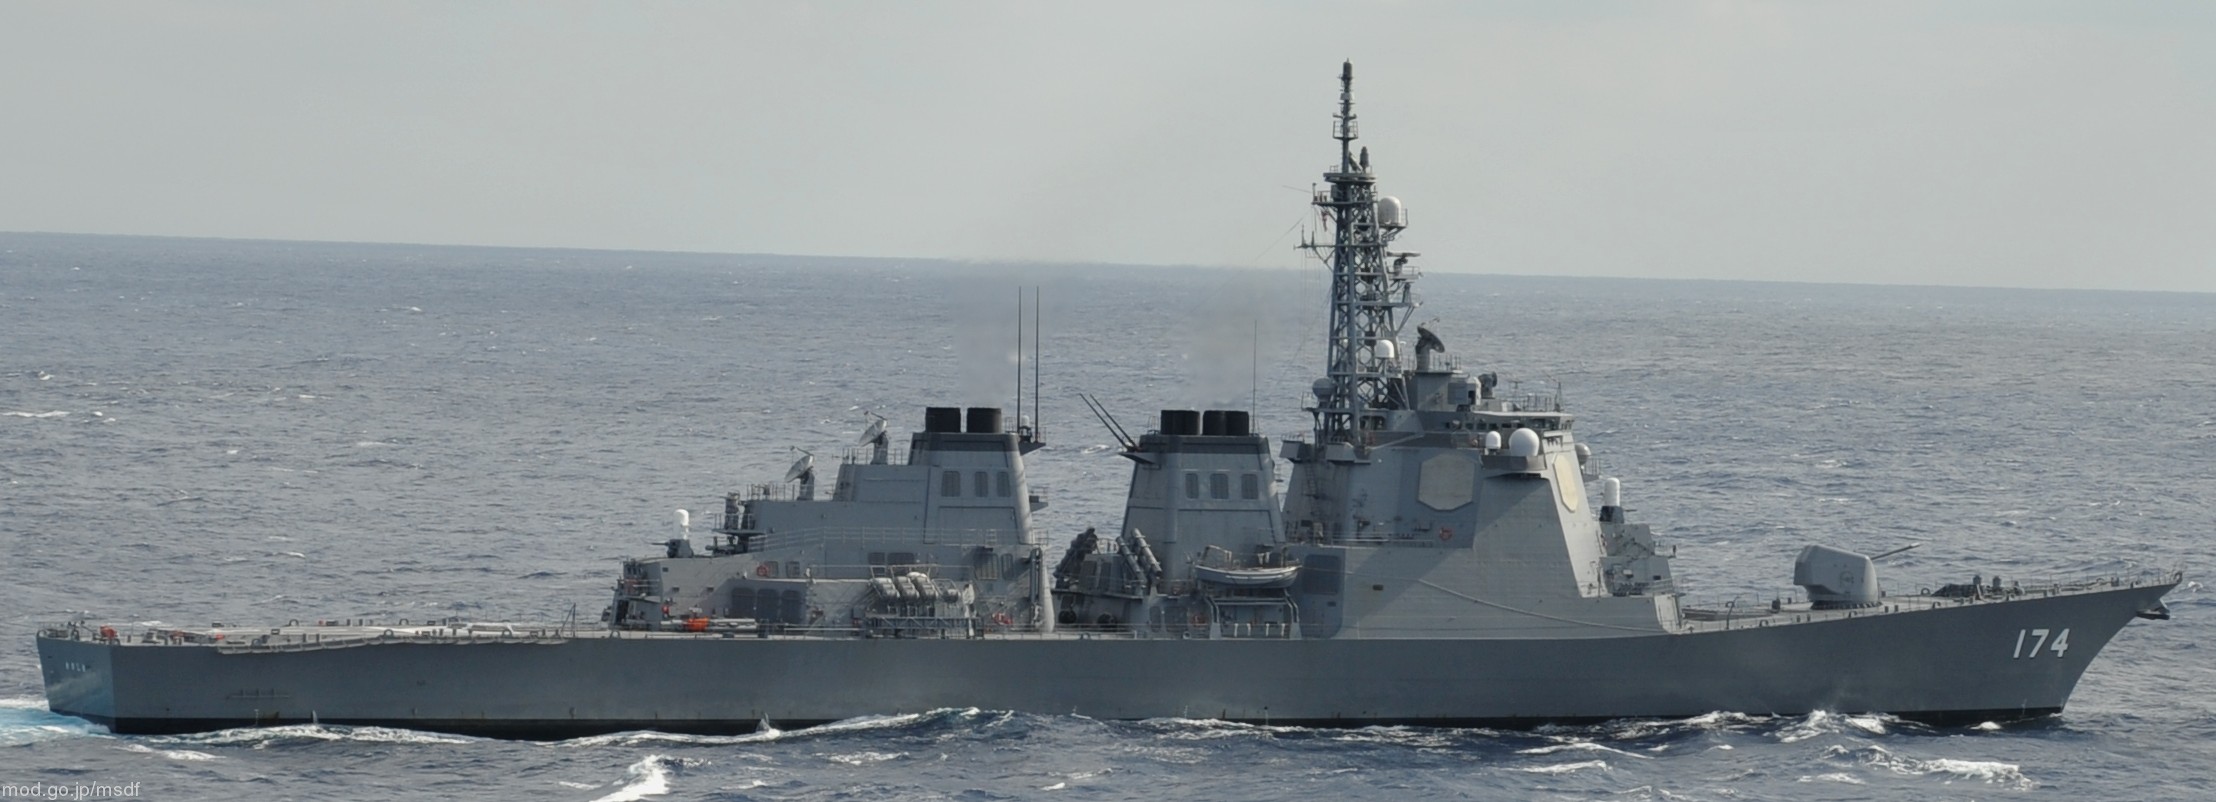 ddg-174 js kirishima kongo class guided missile destroyer aegis japan maritime self defense force jmsdf 08